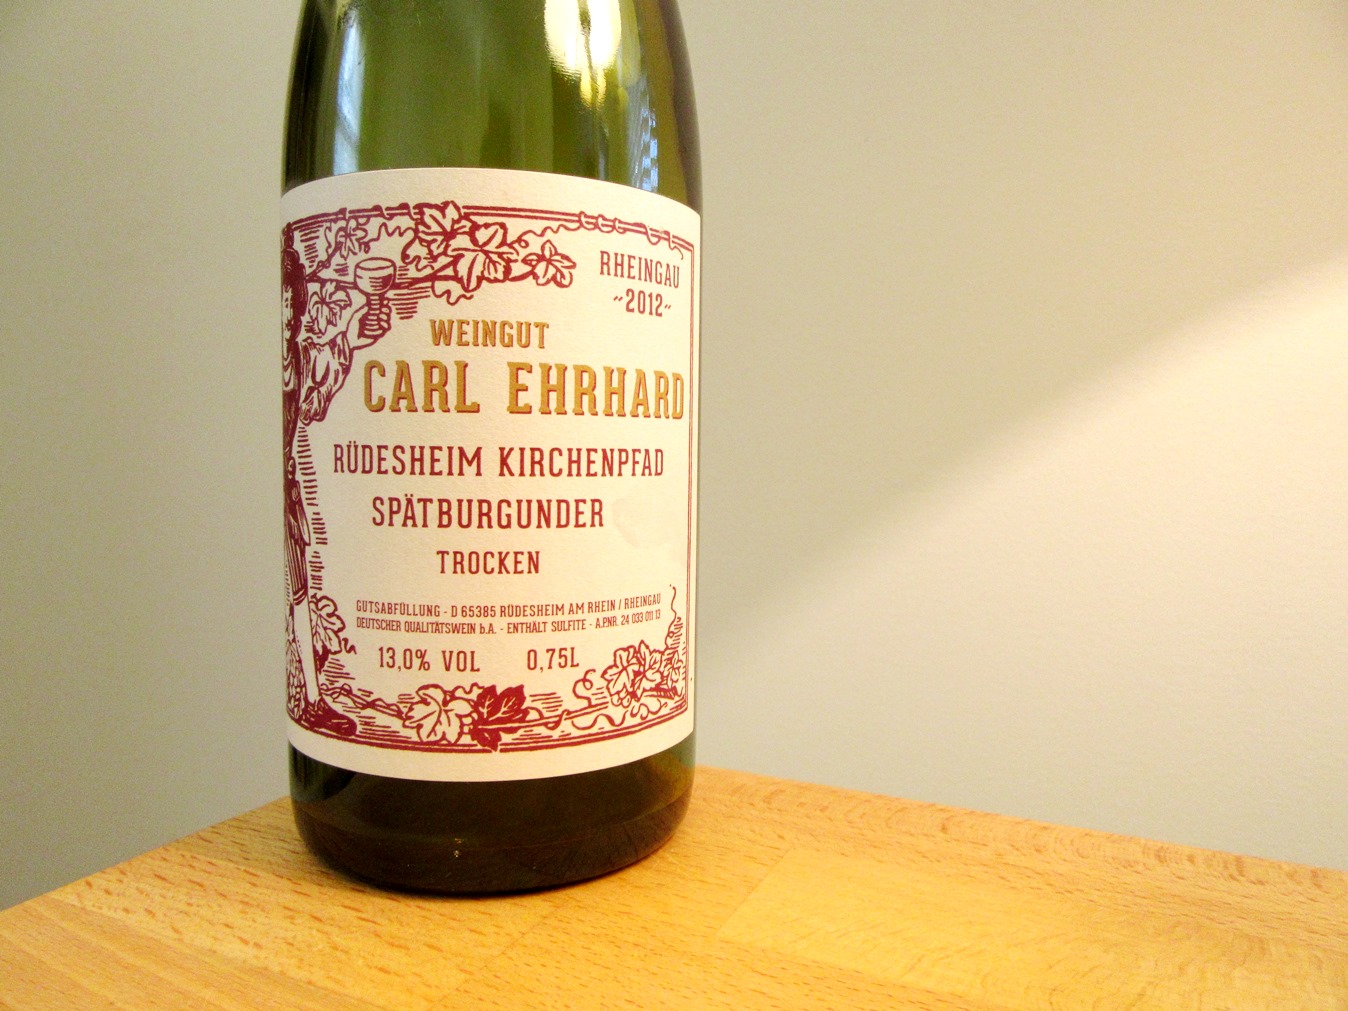 Weingut Carl Ehrhard, Rüdesheim Kirchenpfad Spätburgunder Trocken 2012, Rheingau, Germany, Wine Casual